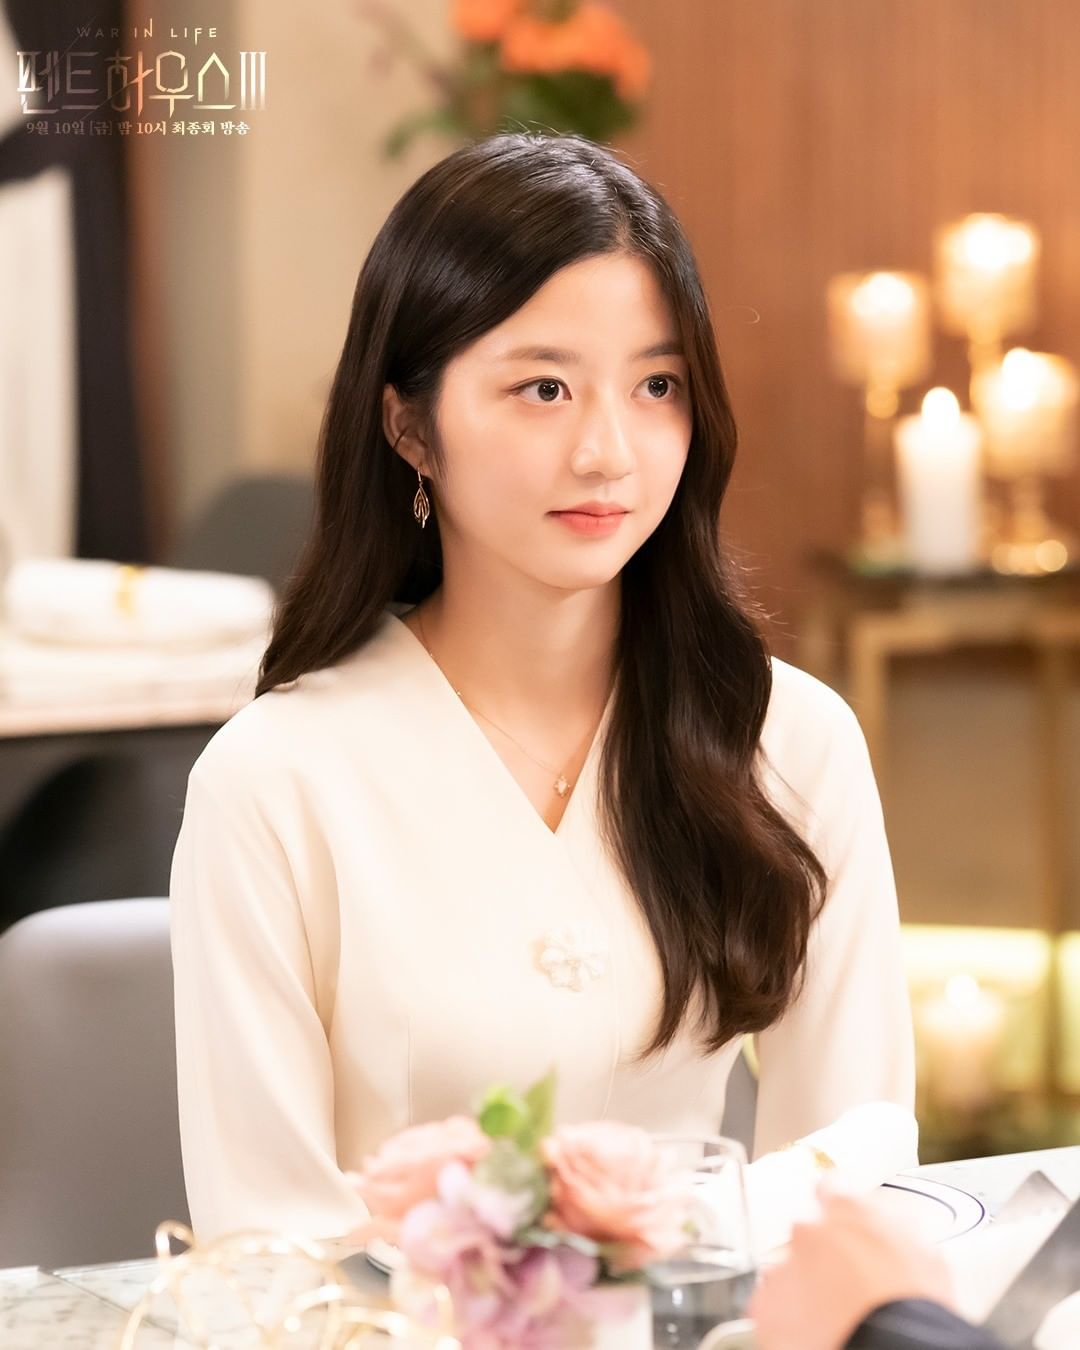 8 penthouses drama 3 episode south korea season Nonton Penthouse